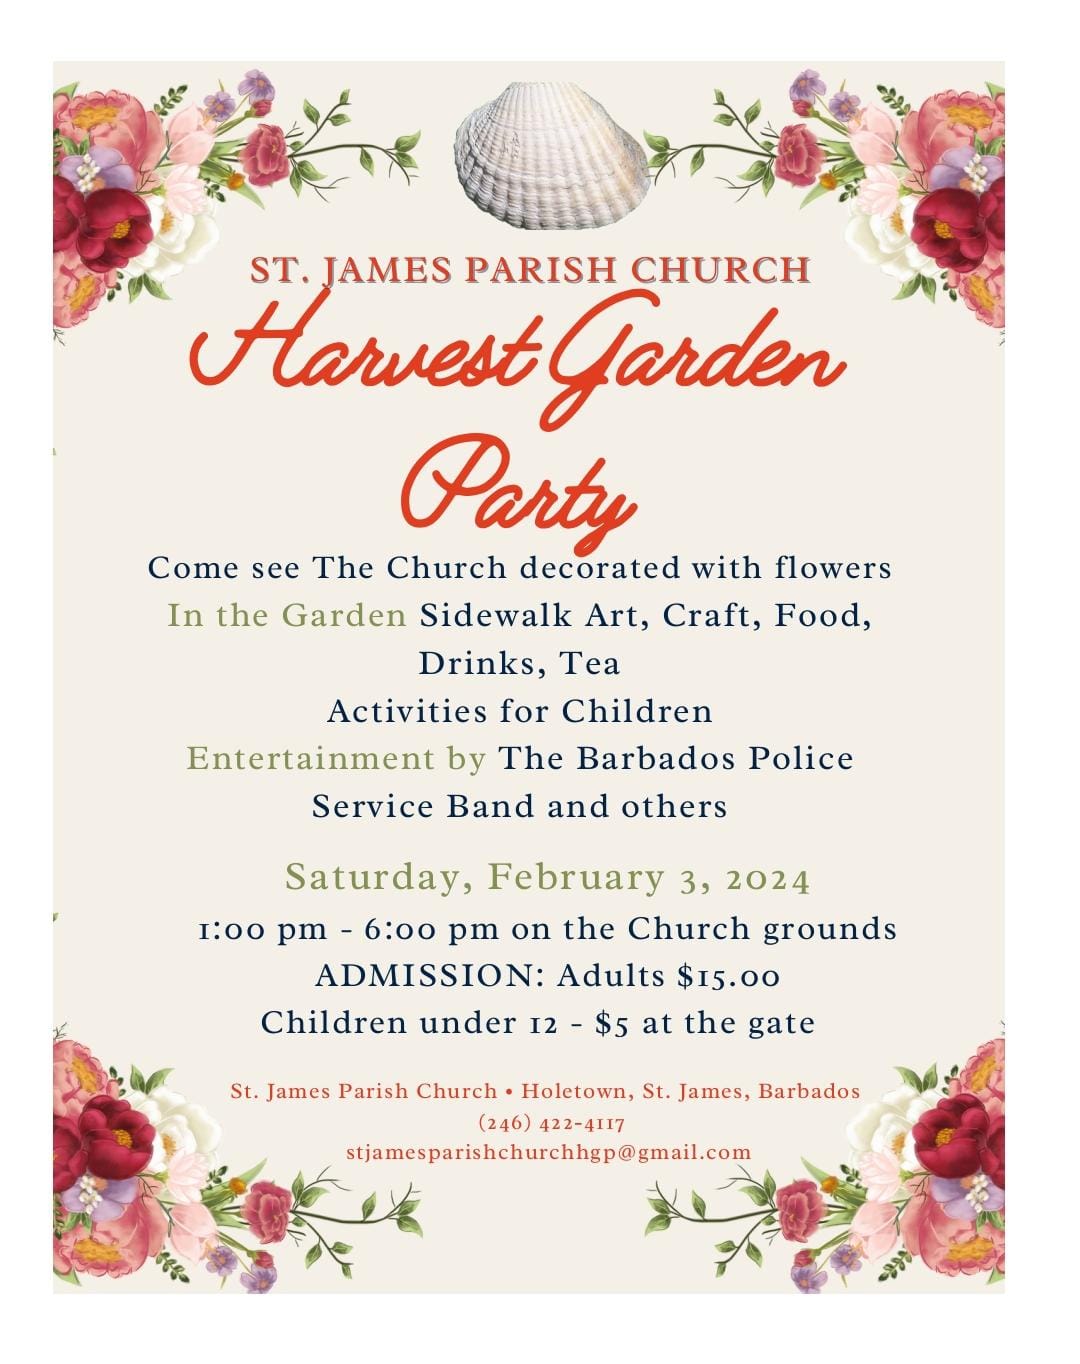 St. James Parish Church Harvest Garden Party